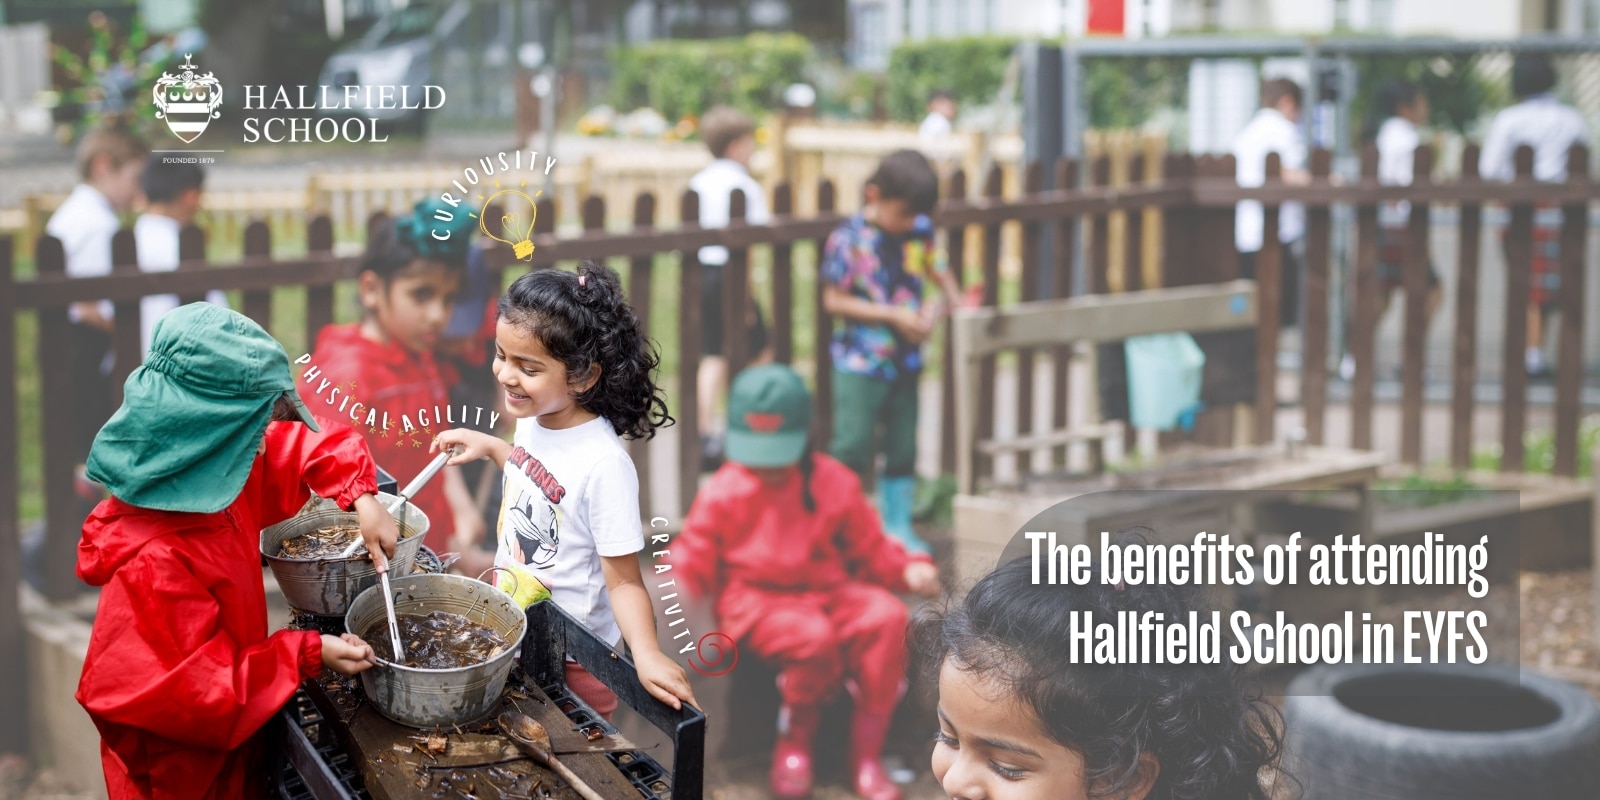 The benefits of attending Hallfield School in EYFS